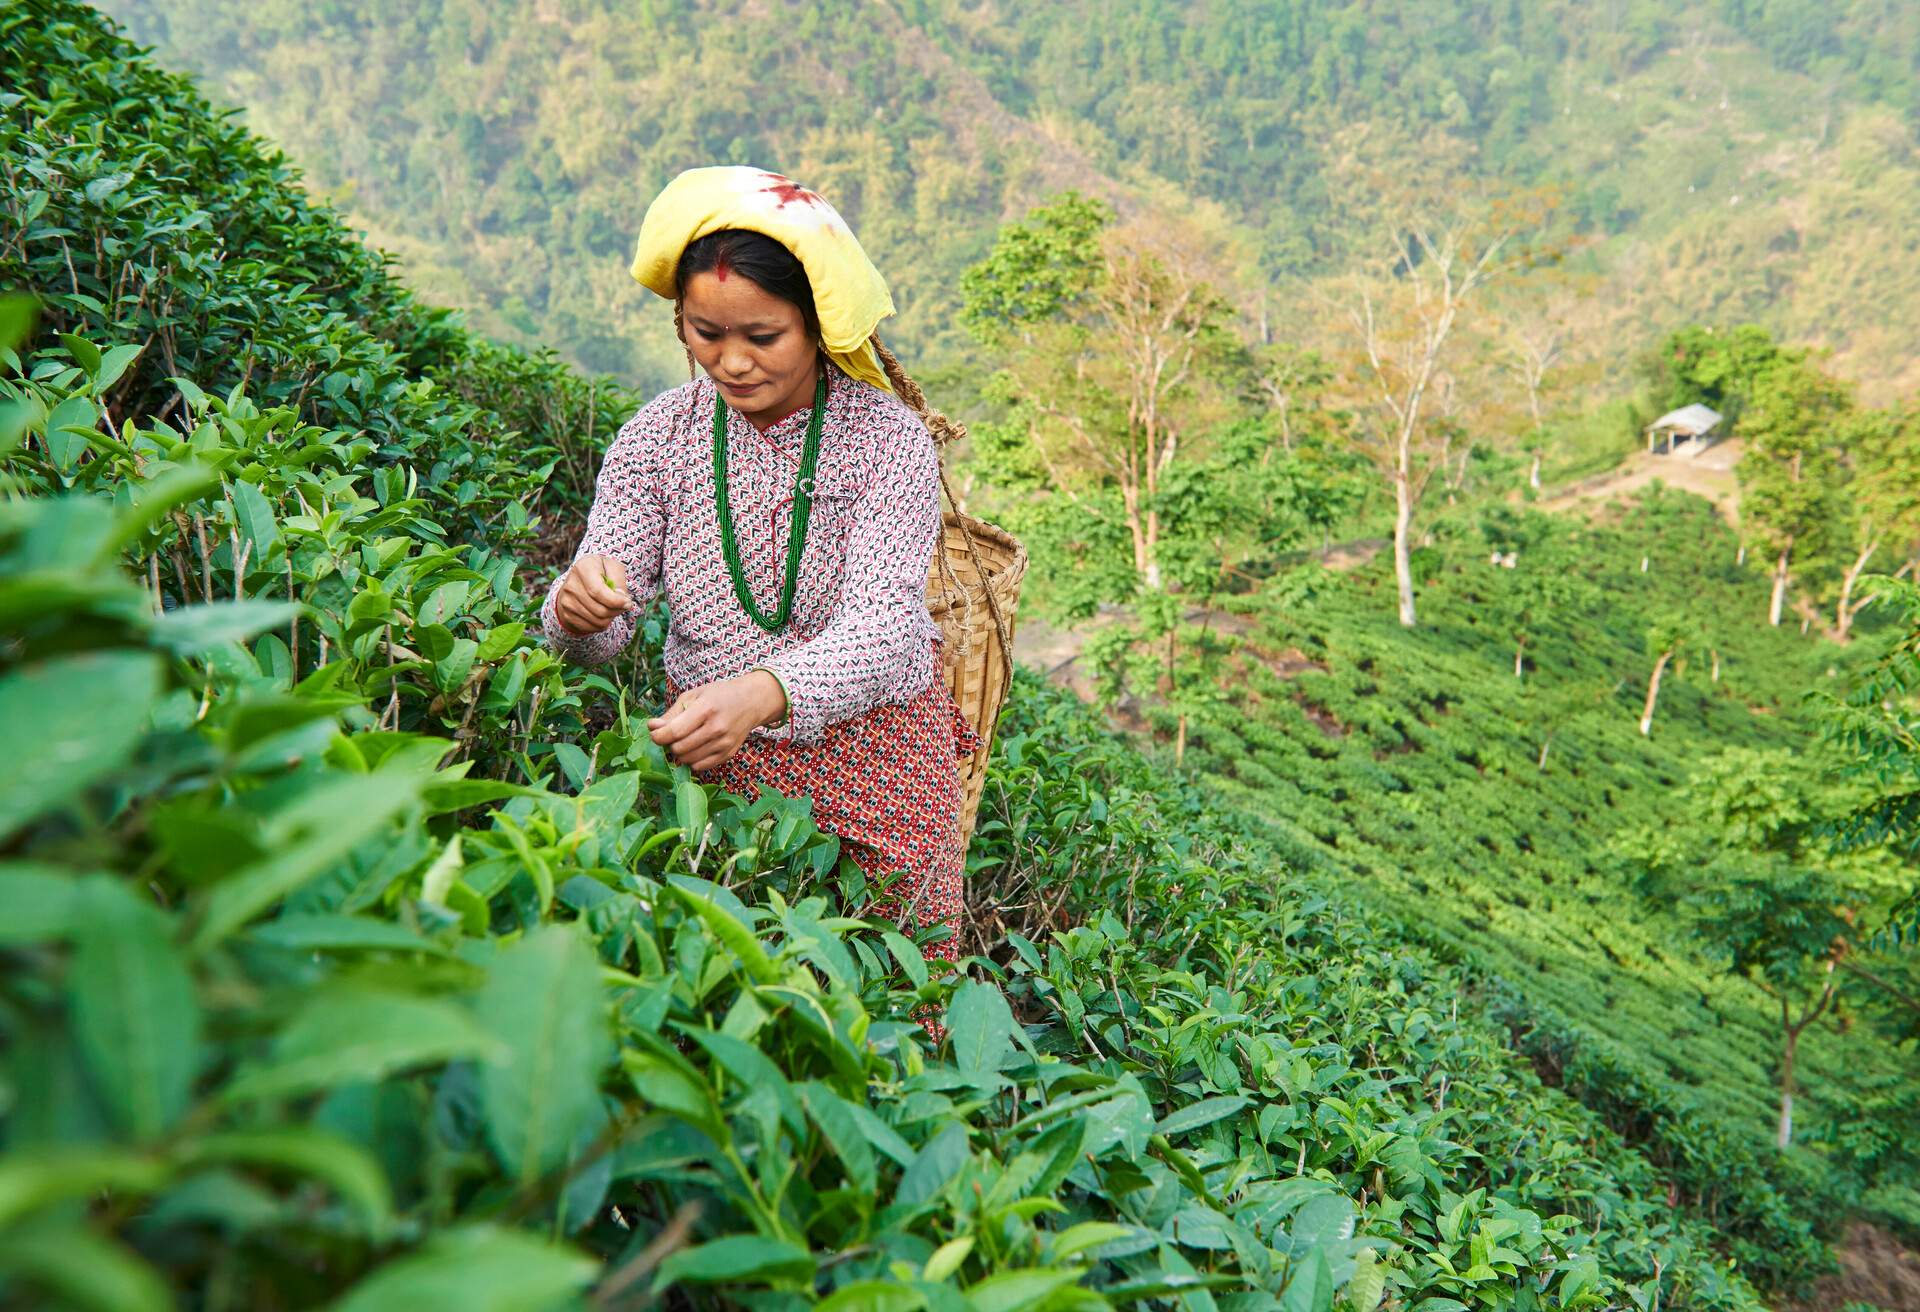 A female labor worker harvesting tea leaves in the tea plantation of the Glenburn Tea Estates in Darjeeling, INDIA